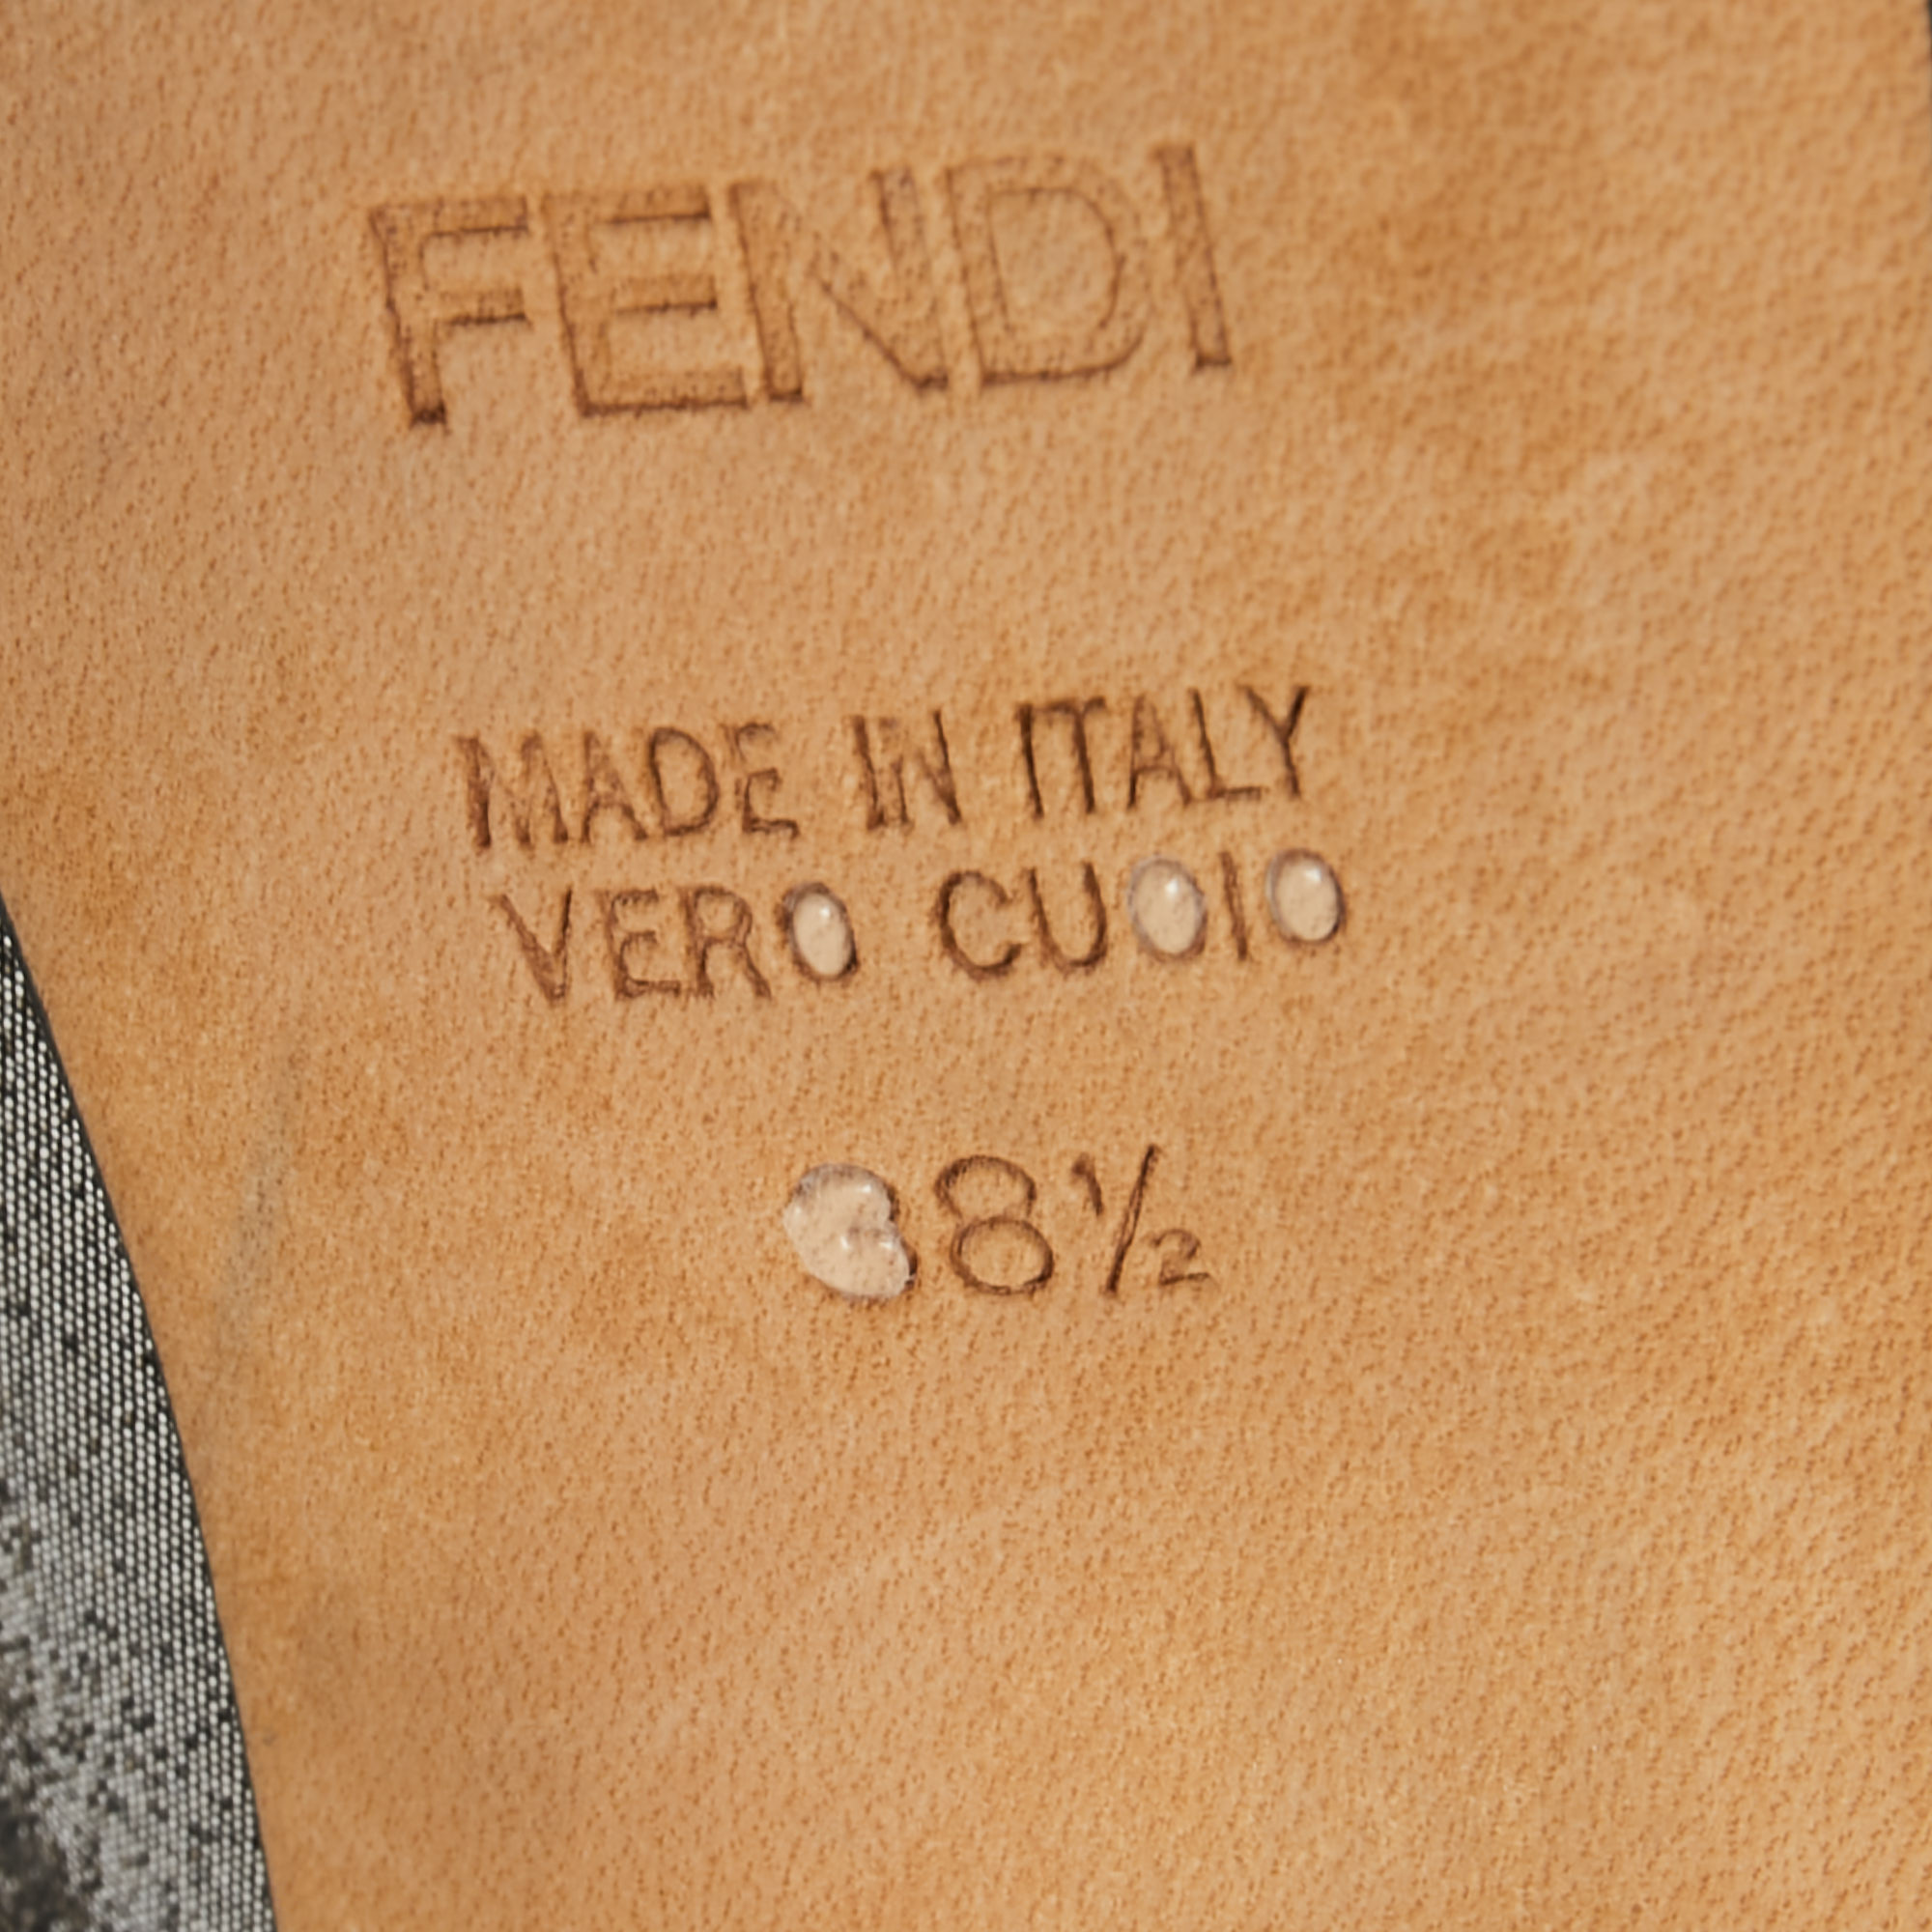 Fendi Metallic Grey Suede Fendista Peep Toe Slingback Platform Sandals Size 38.5